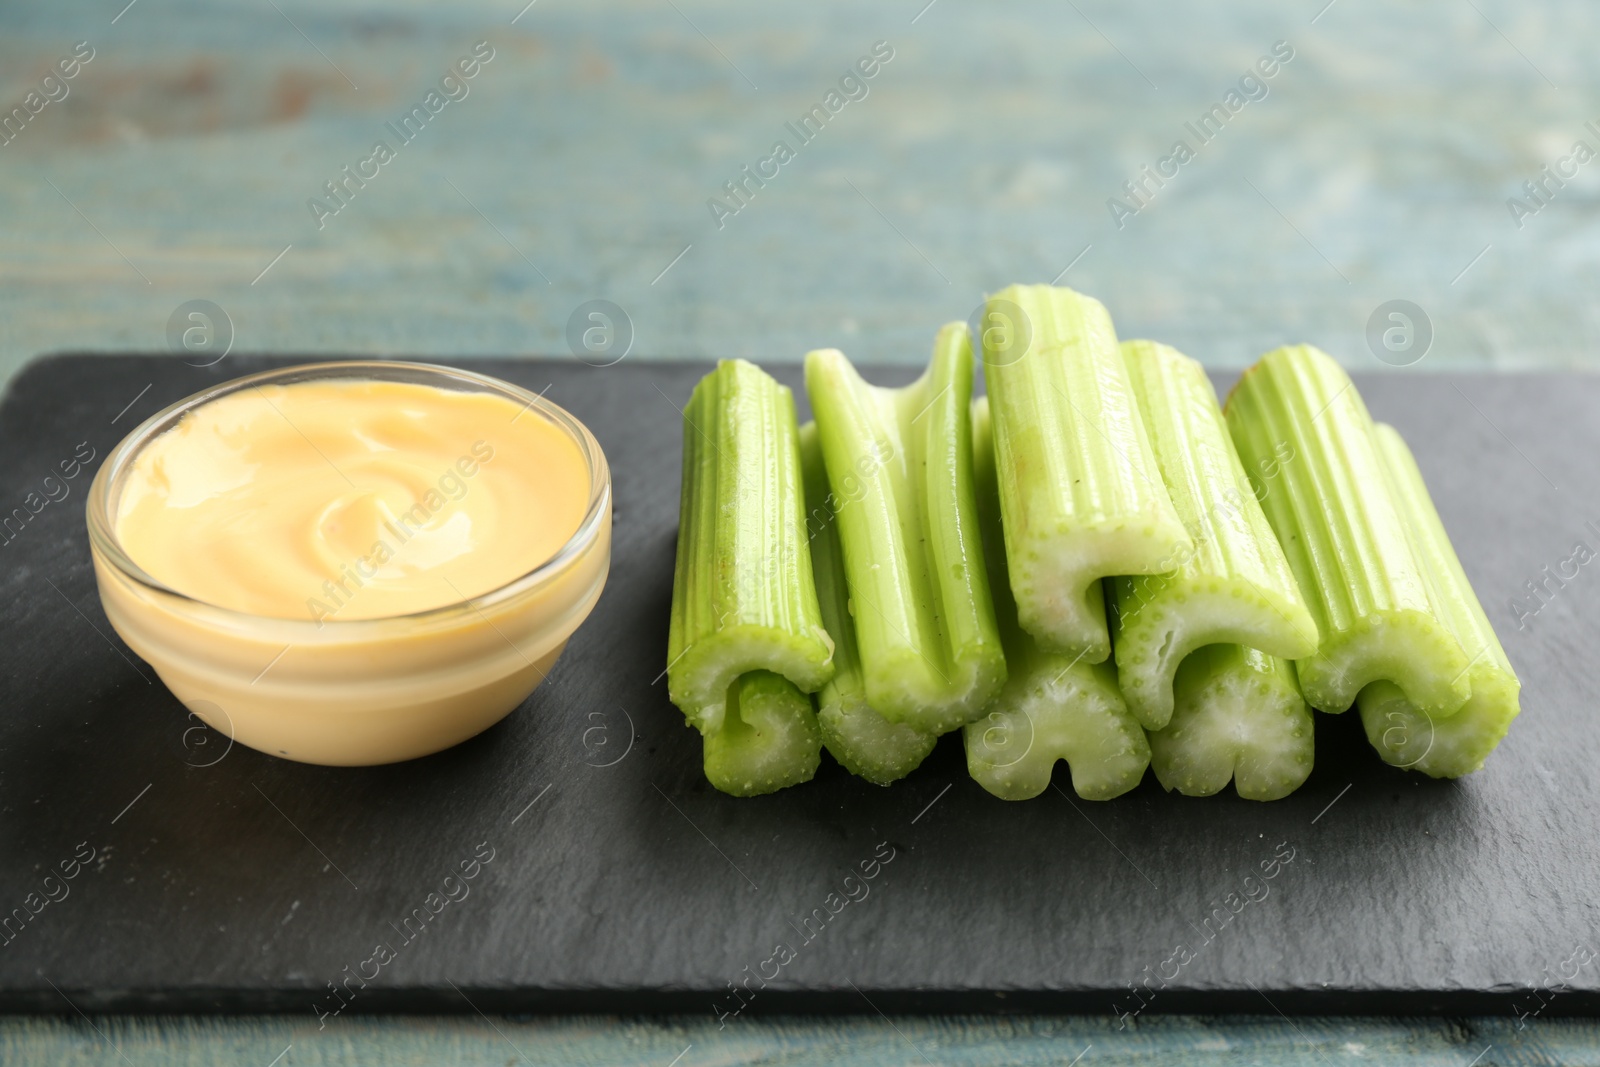 Photo of Celery sticks with dip sauce on slate plate, closeup